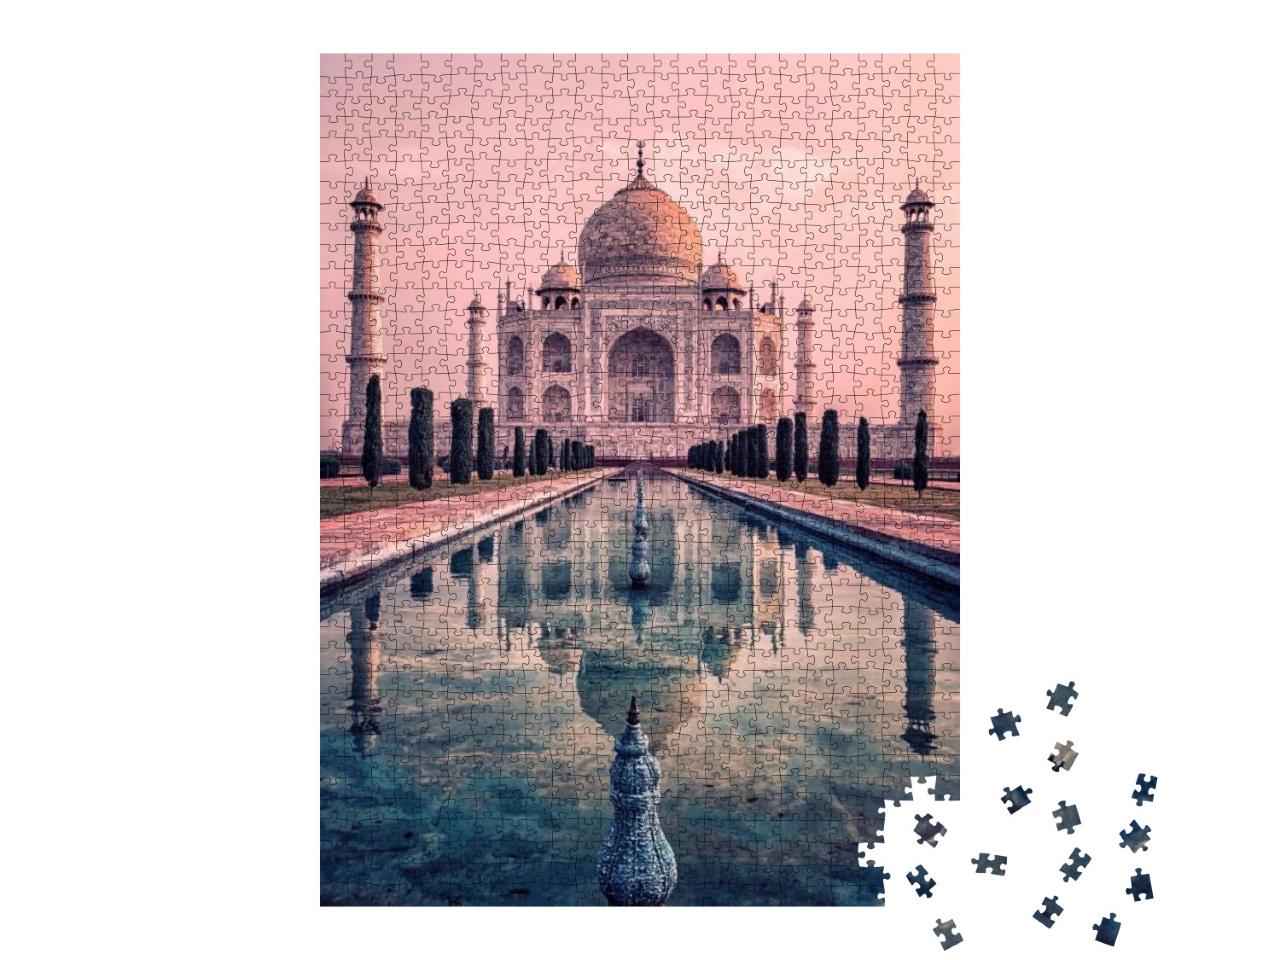 Puzzle 1000 Teile „Taj Mahal im Licht des Sonnenaufgangs, Agra, Indien“